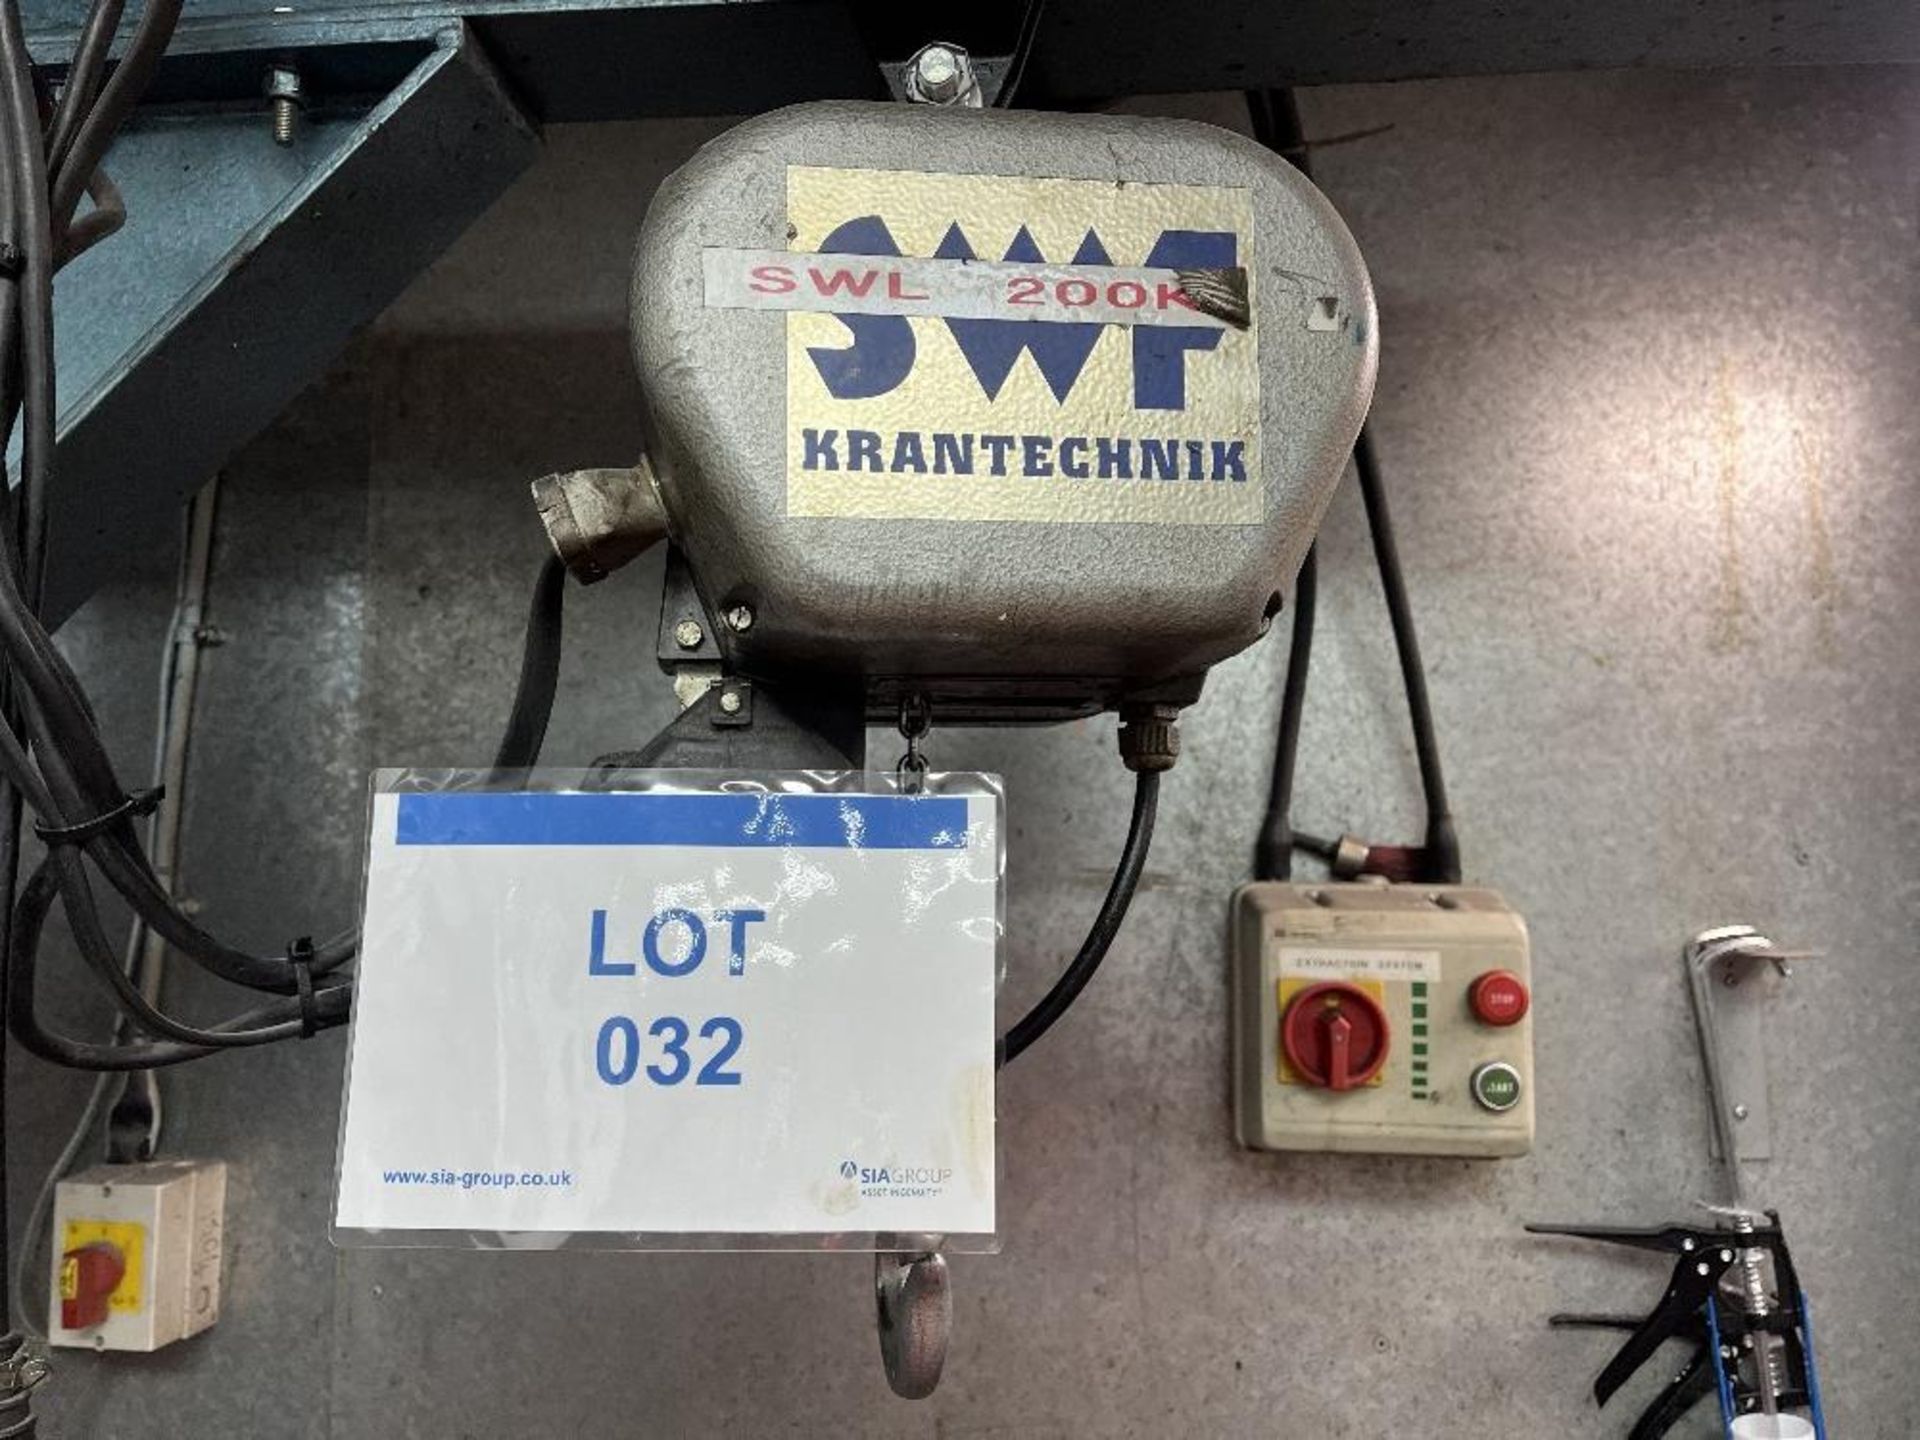 Krantechnik 200kg swl hoist with pendant control - Image 2 of 5